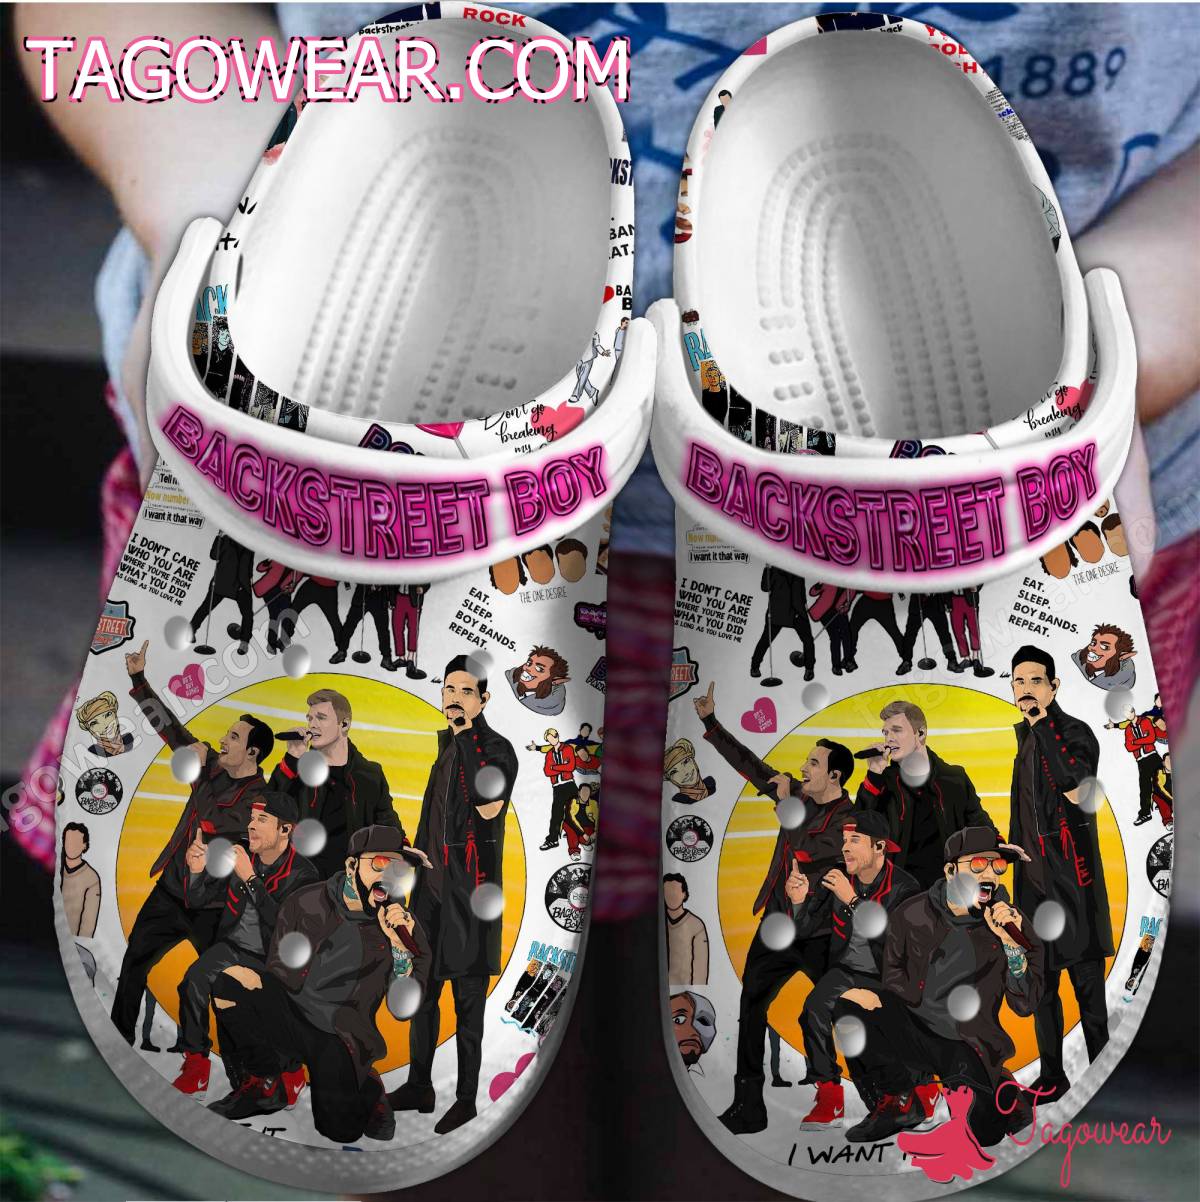 Backstreet Boys Band Crocs Clogs Shoes